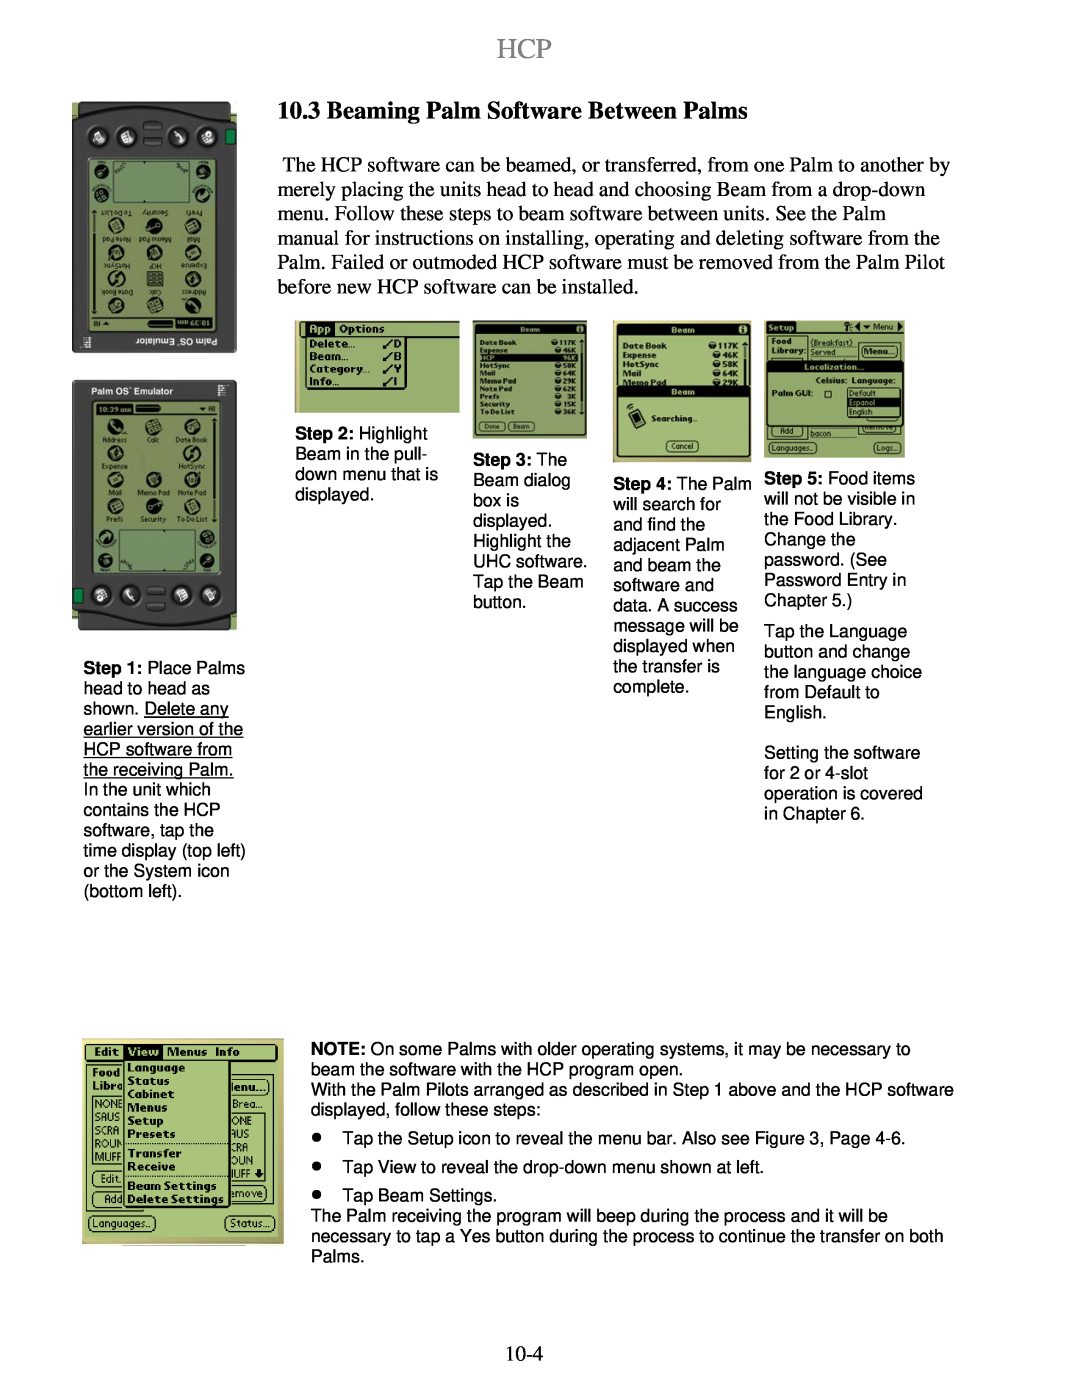 Frymaster HCP operation manual Beaming Palm Software Between Palms, 10-4 